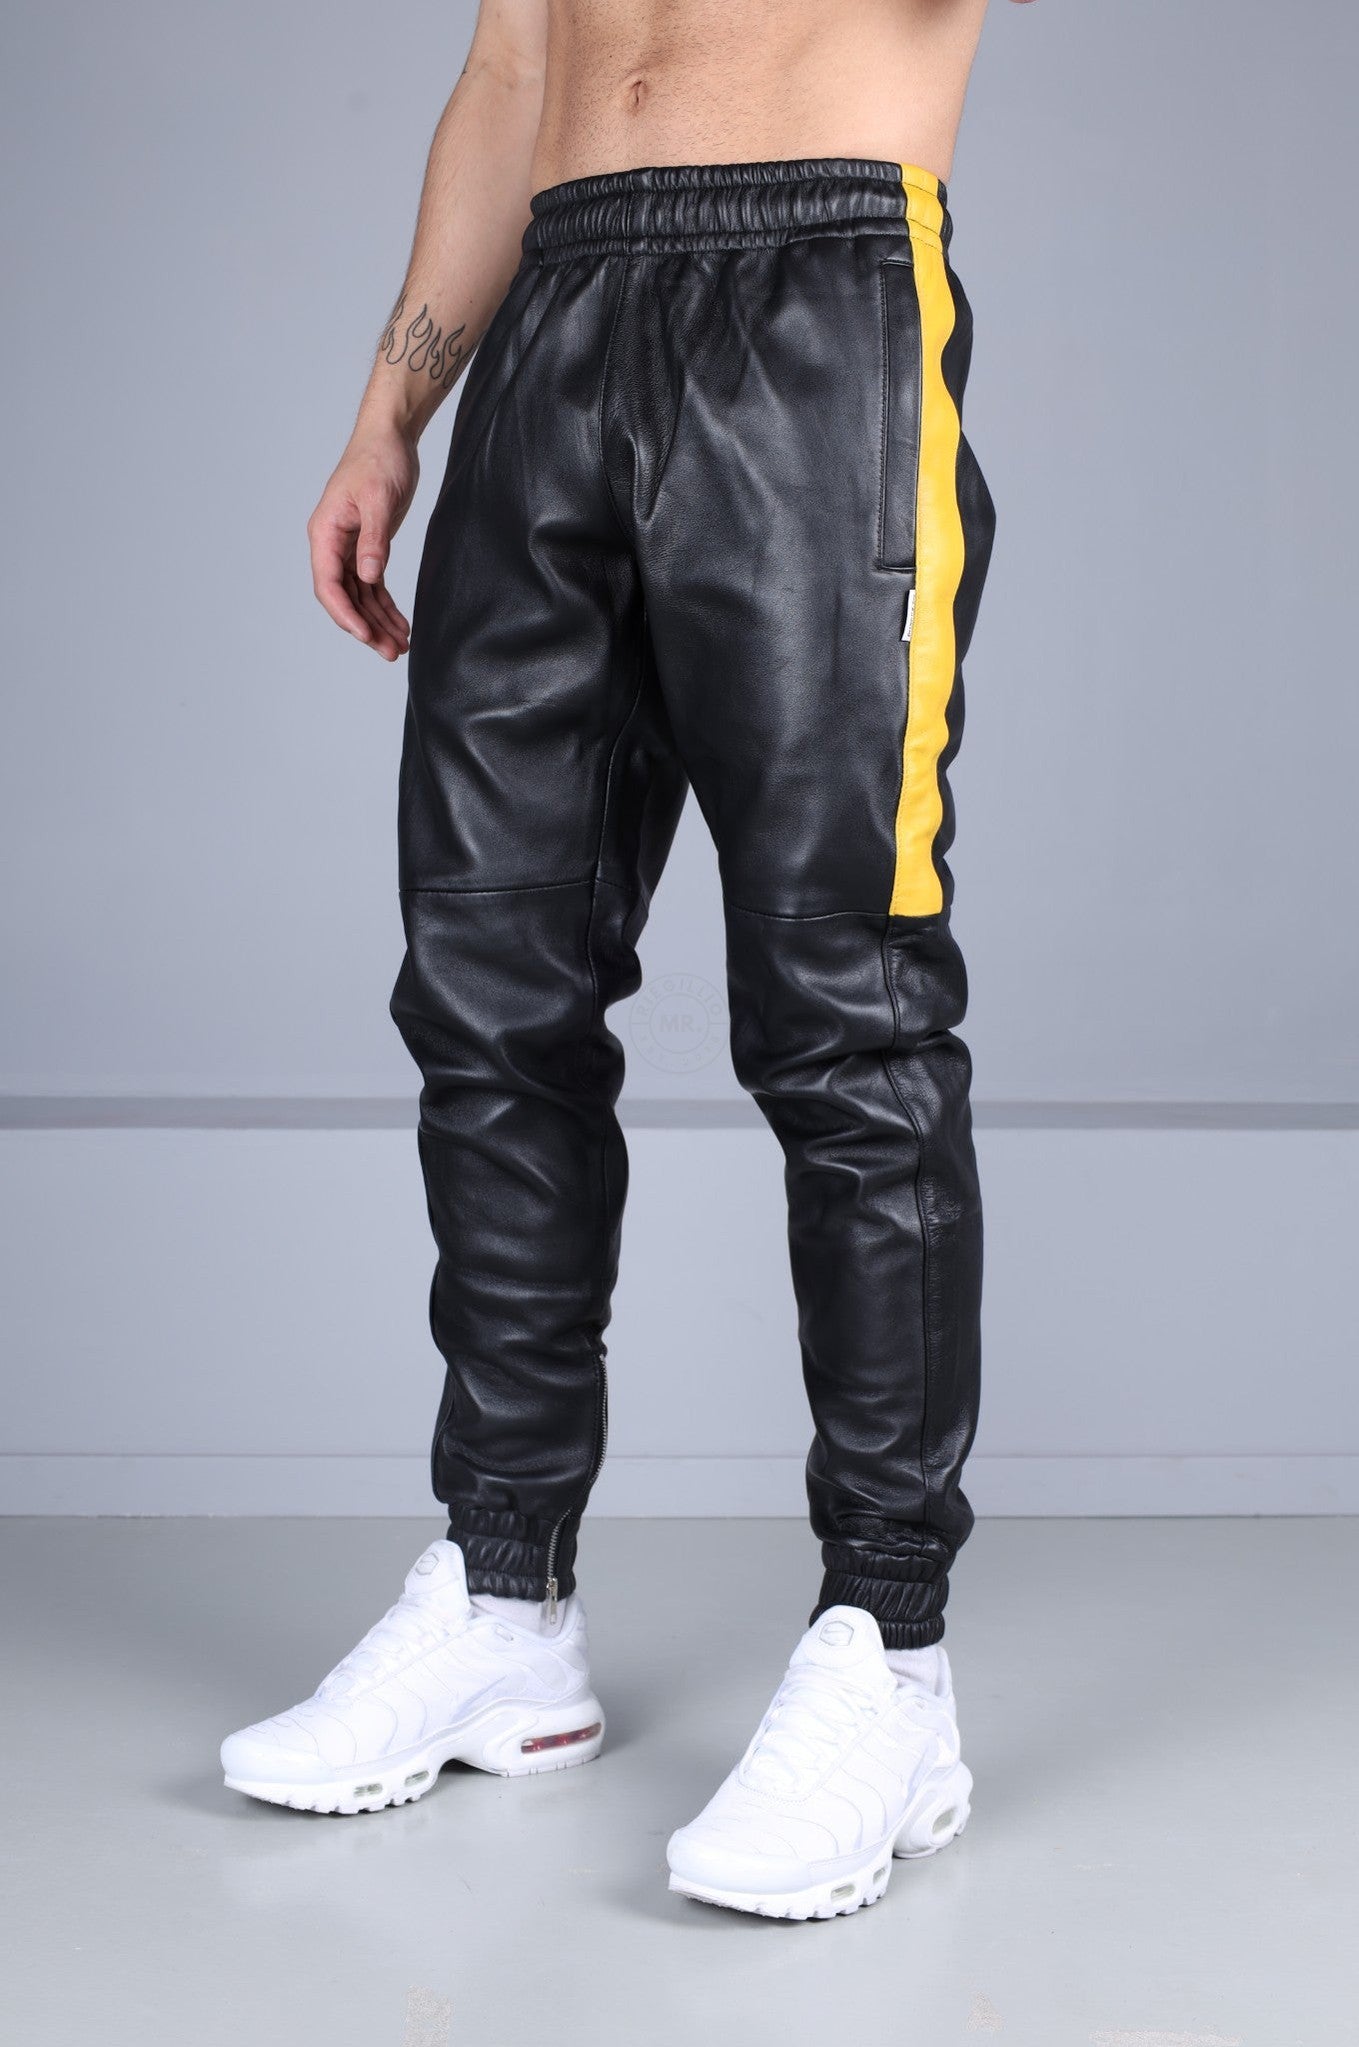 Black Leather Tracksuit Pants - Yellow Stripe at MR. Riegillio